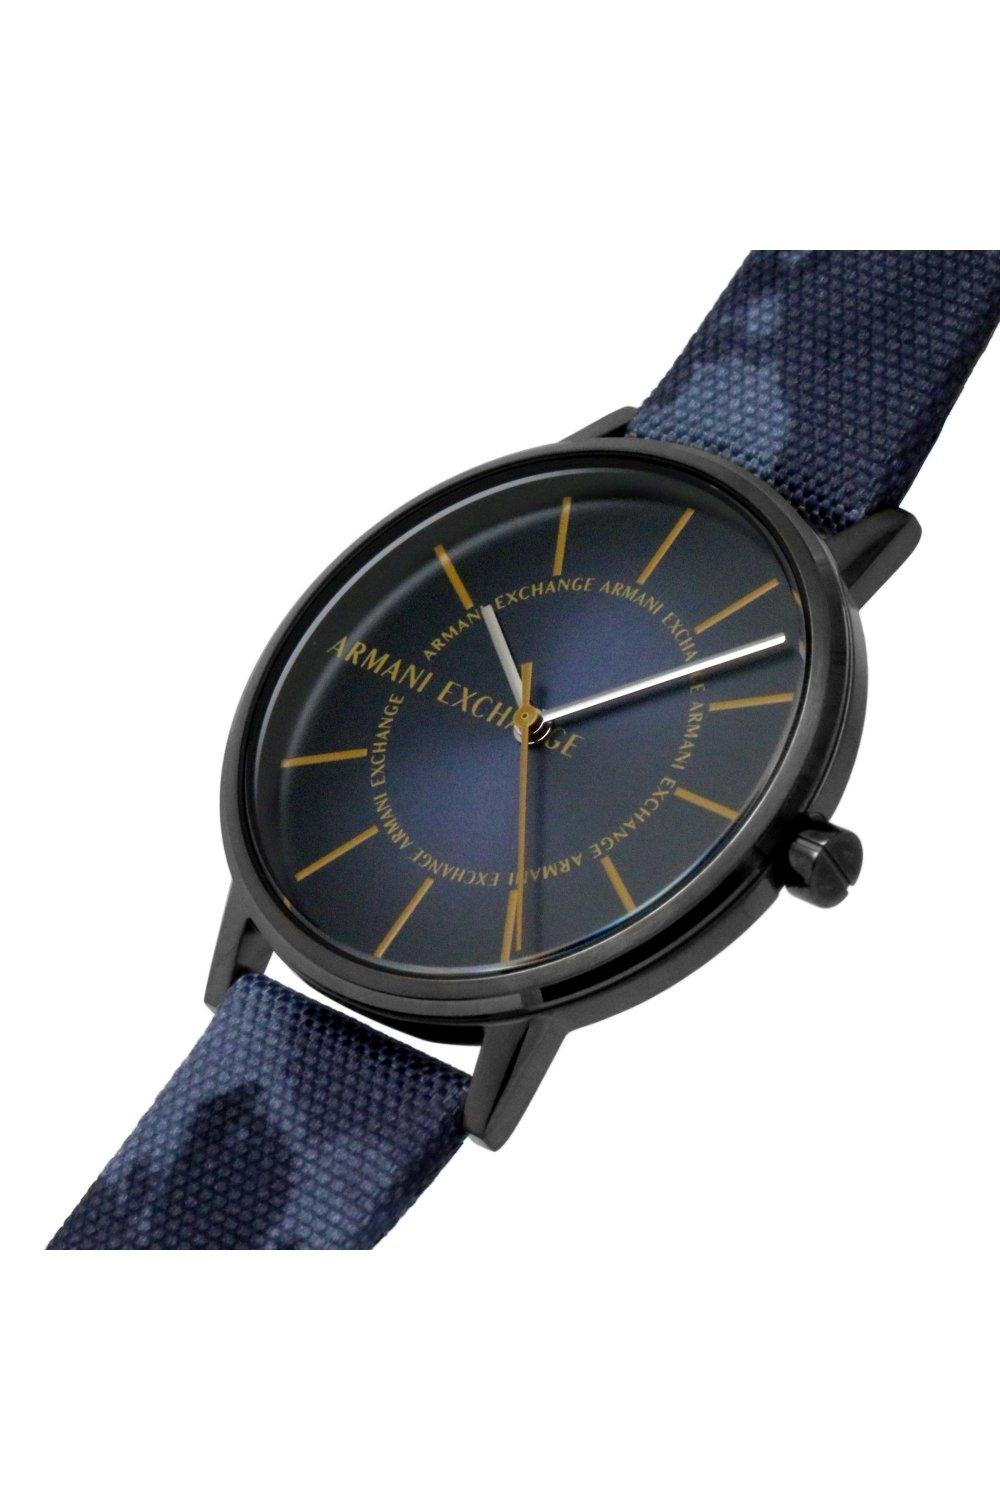 Watch Steel | Stainless Armani Analogue Watches | - Fashion Exchange Ax2750 Quartz